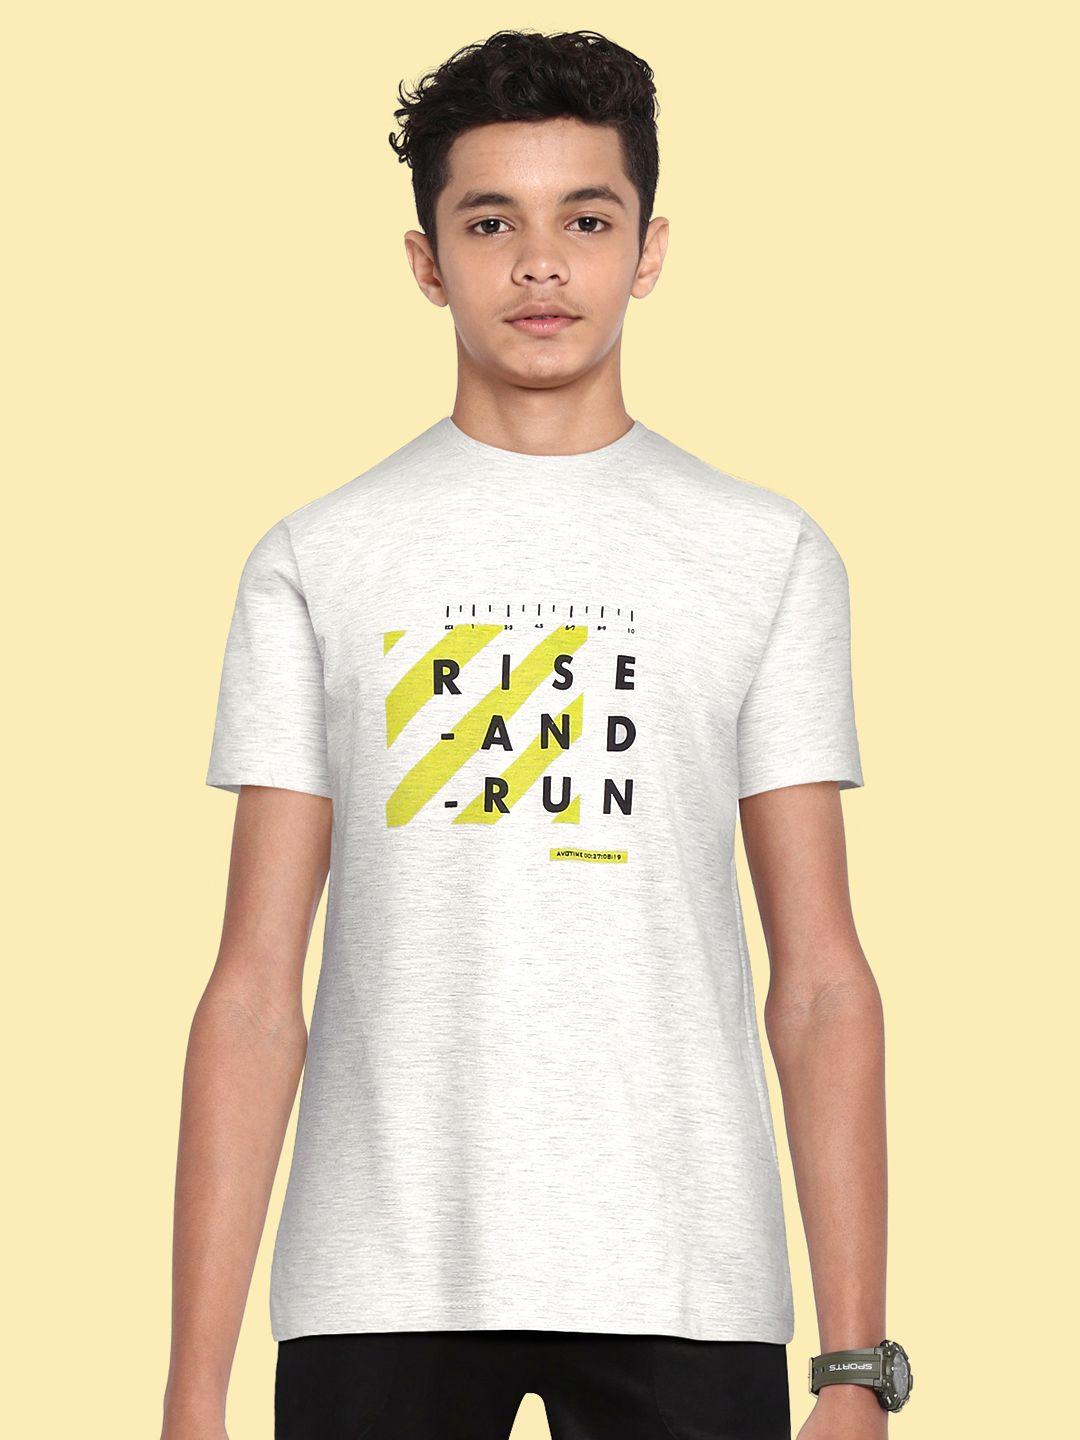 hrx by hrithik roshan active u-17 boys white bio-wash brand carrier tshirts